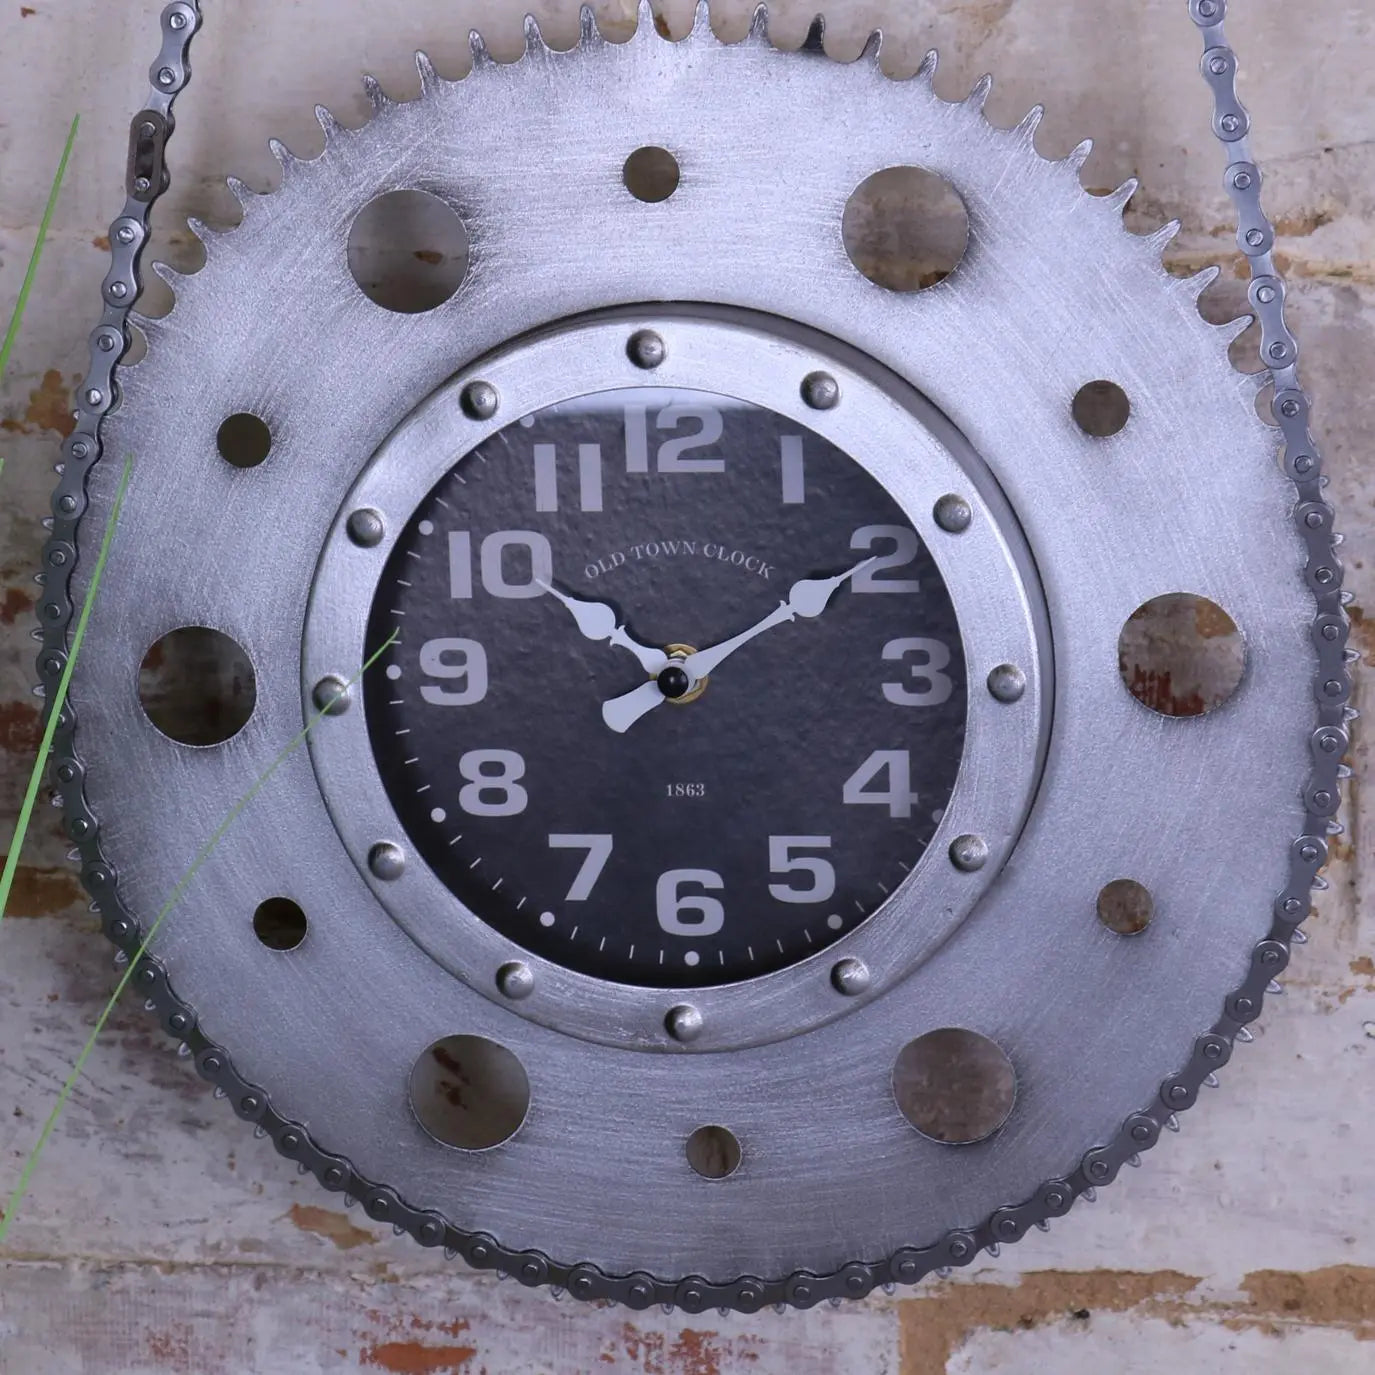 Rajola Bike Chain Style Industrial Wall Clock Closeup of Face